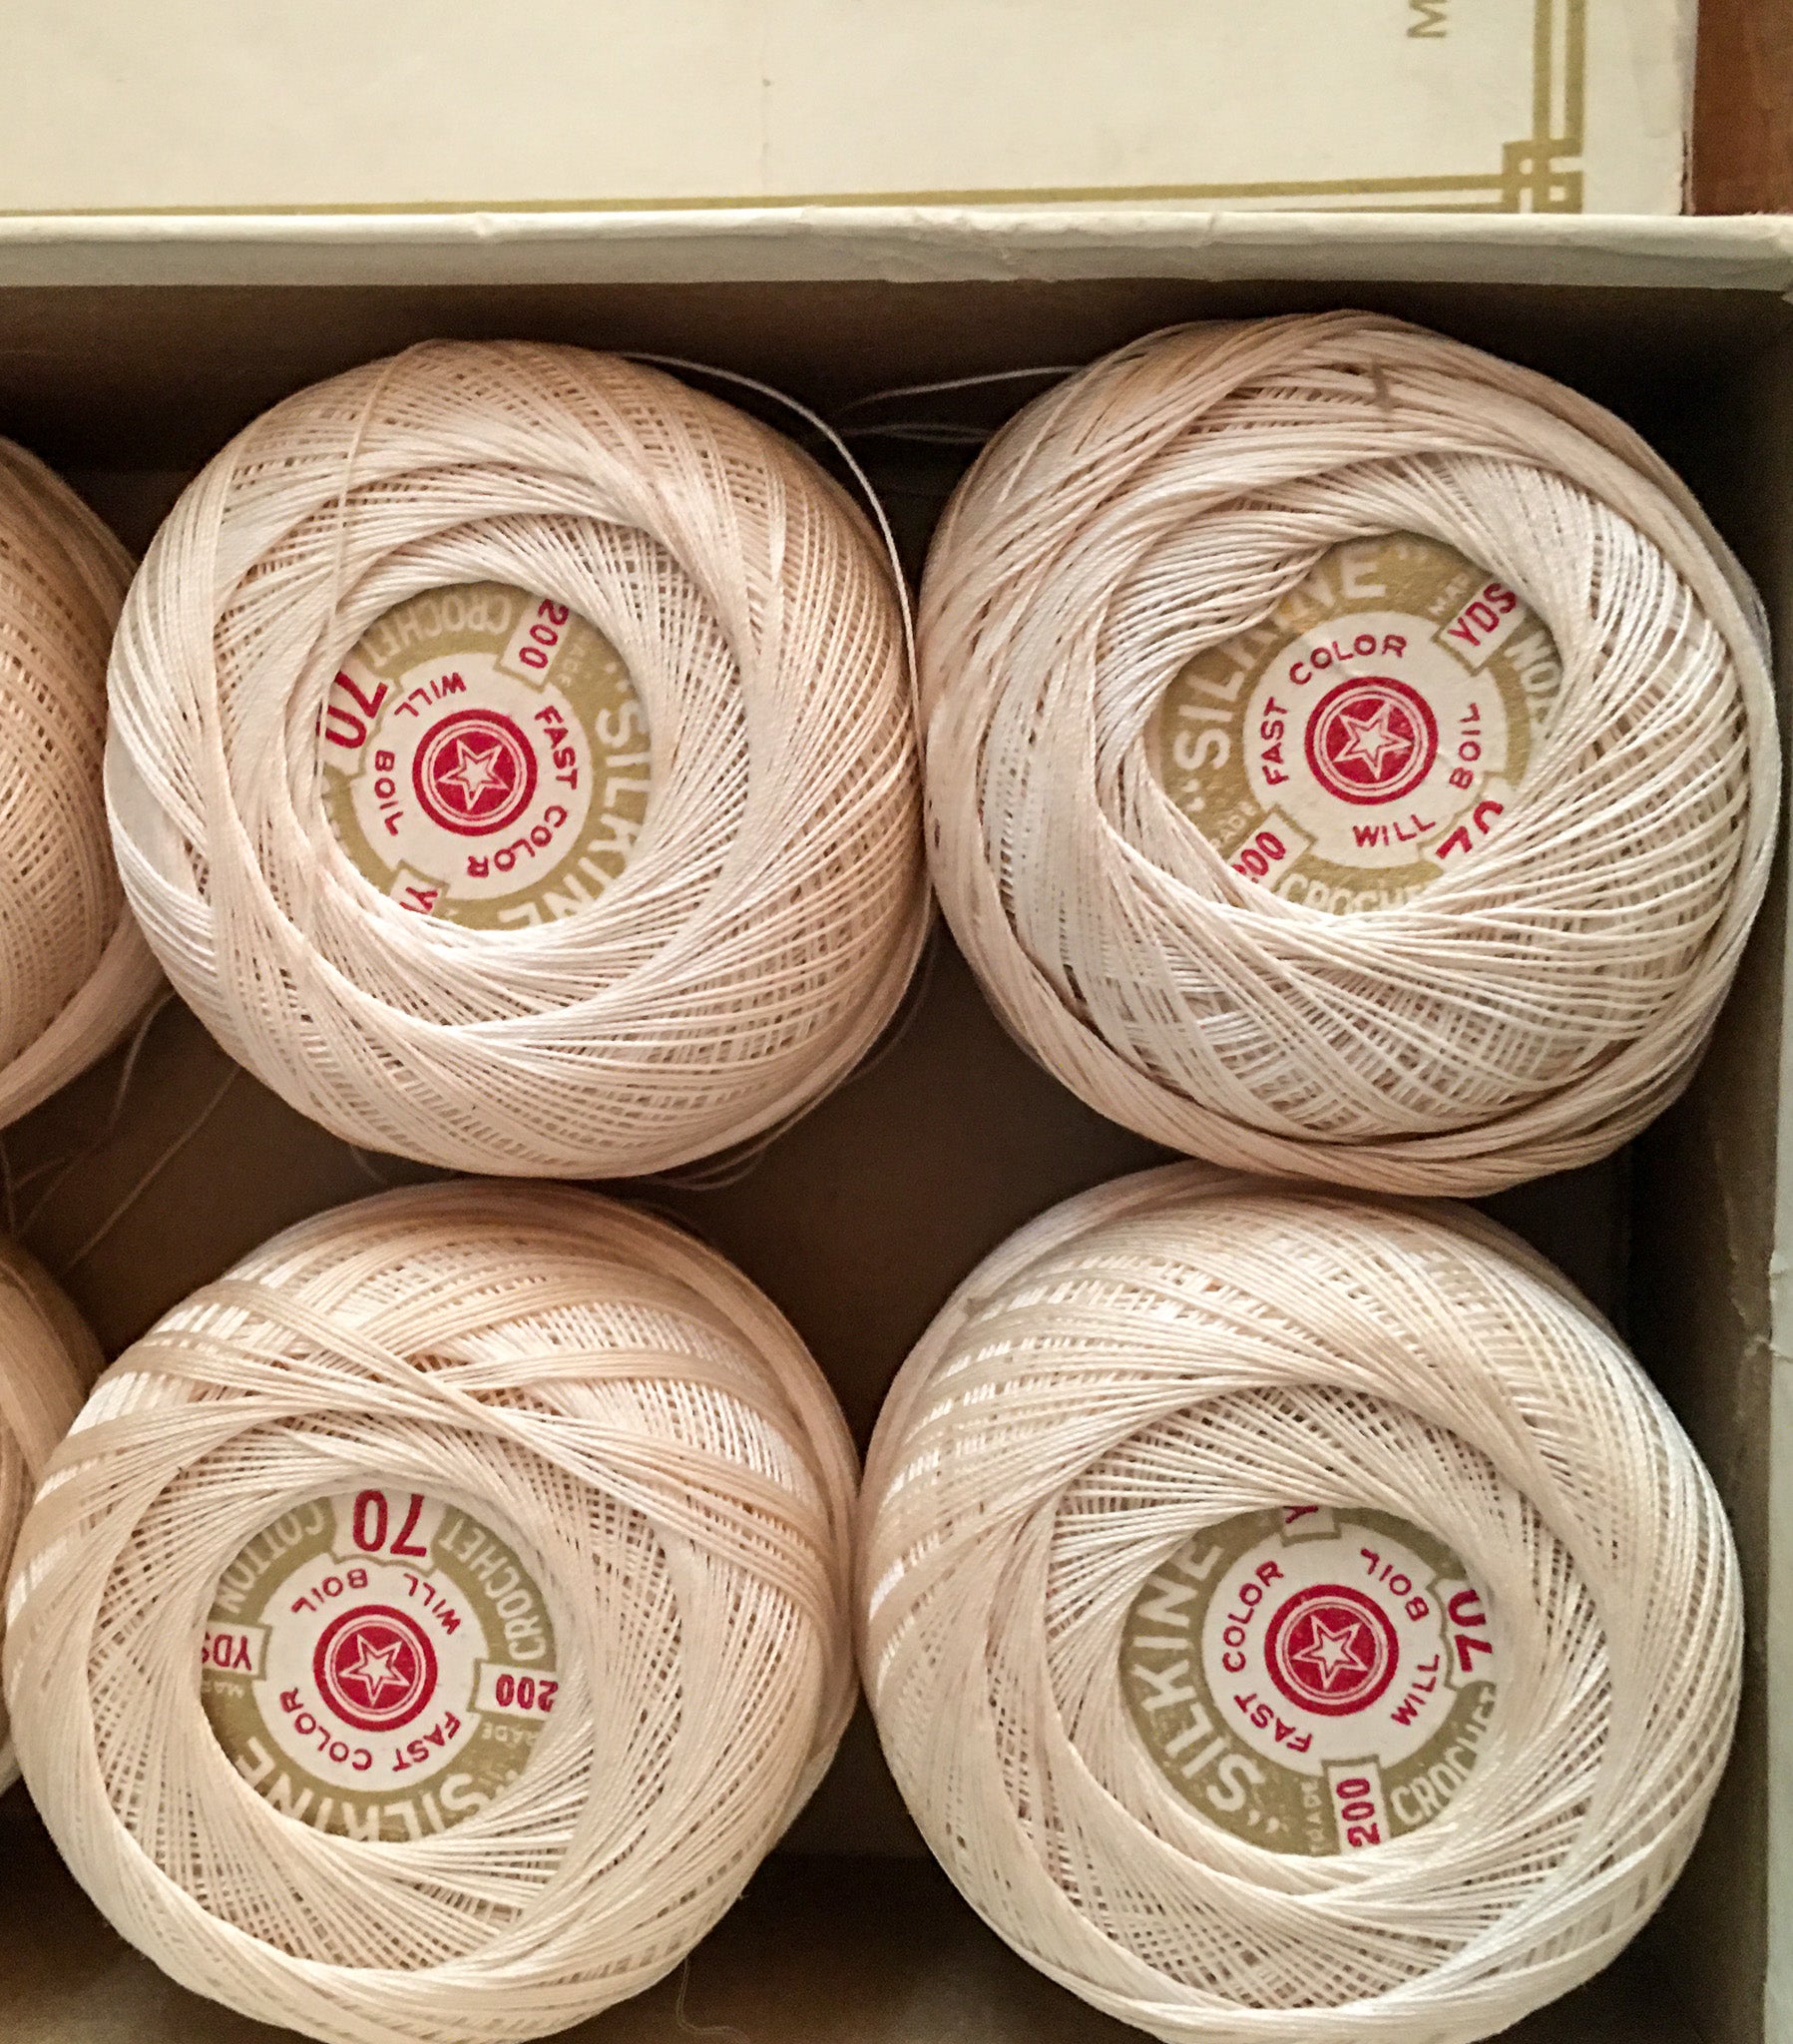 Vintage American Thread Co. Silkine Crochet Cotton, 10 New Skeins in Original Box